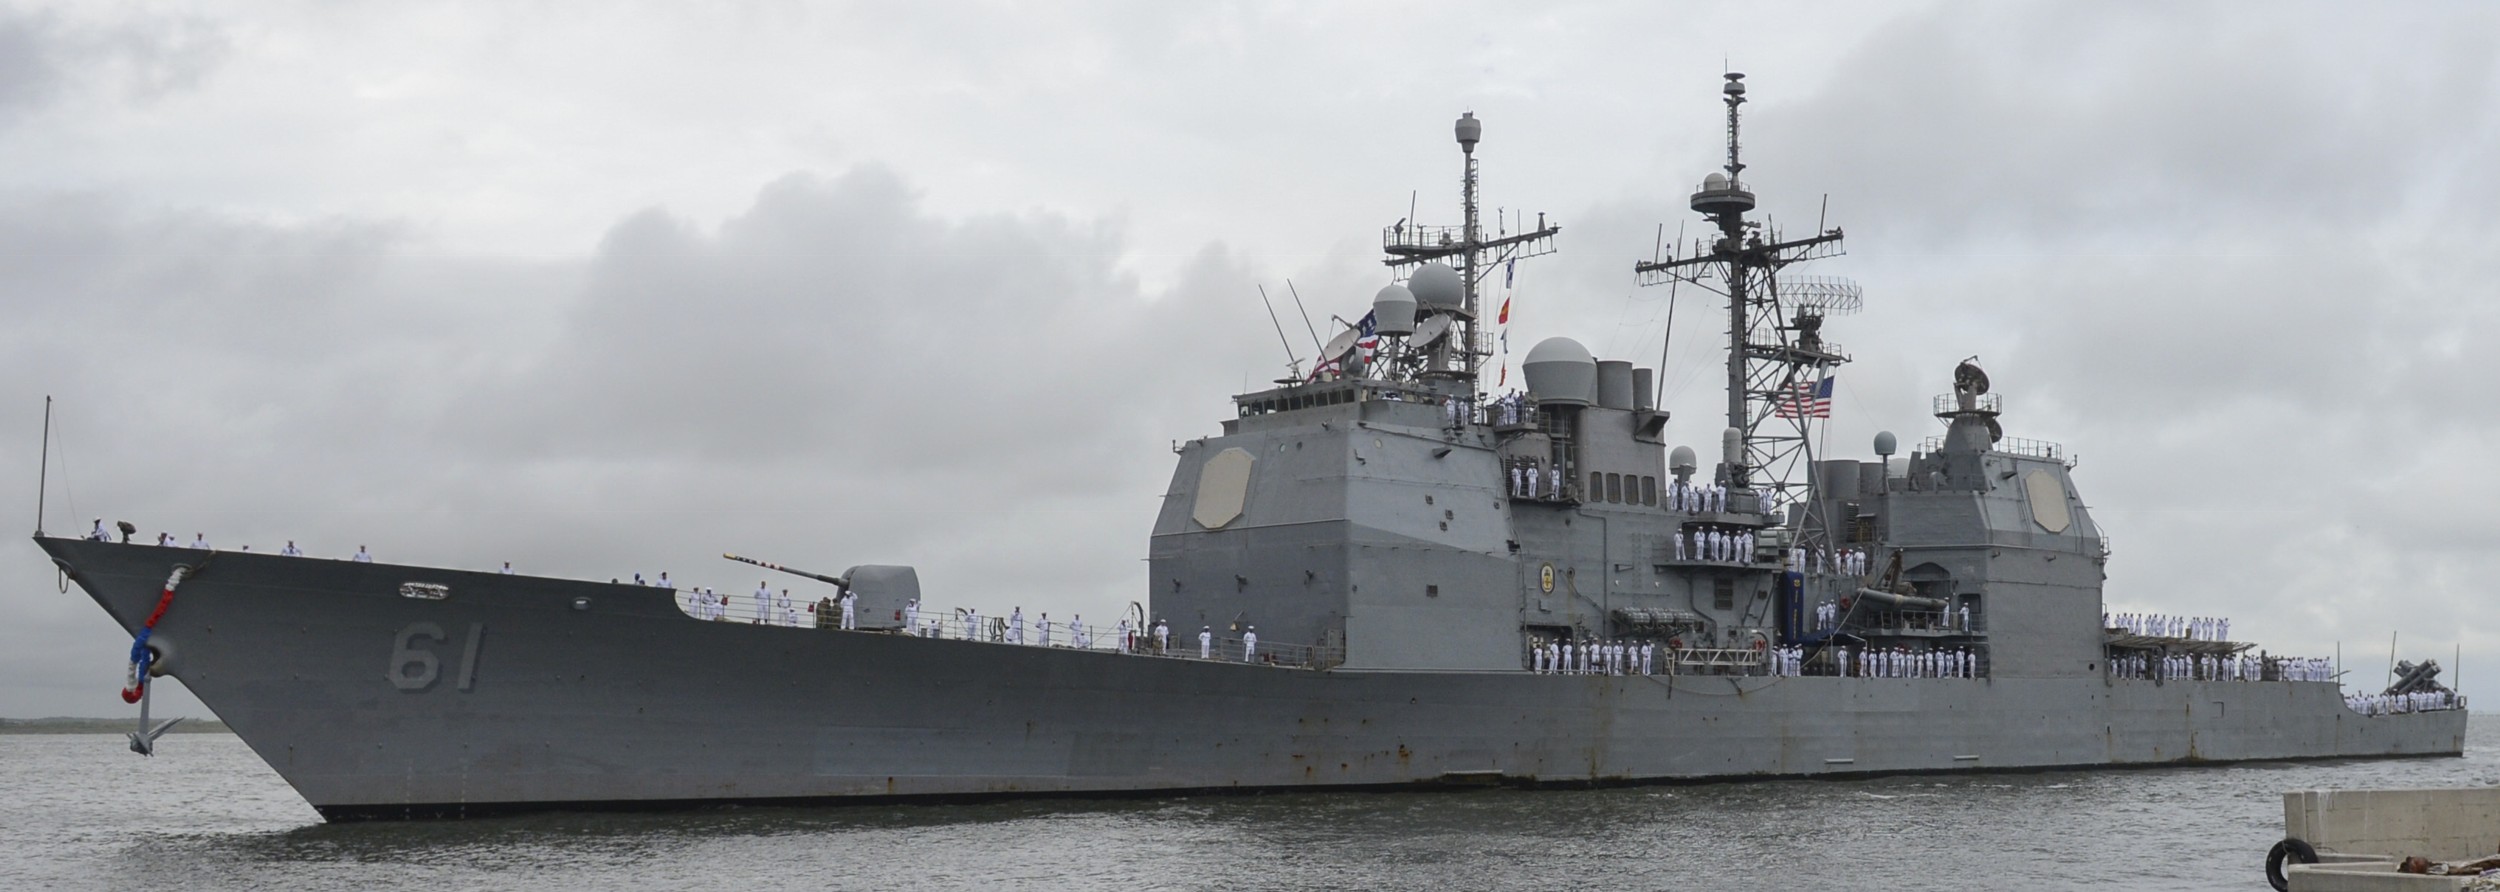 cg-61 uss monterey ticonderoga class guided missile cruiser aegis us navy returning naval station norfolk 126